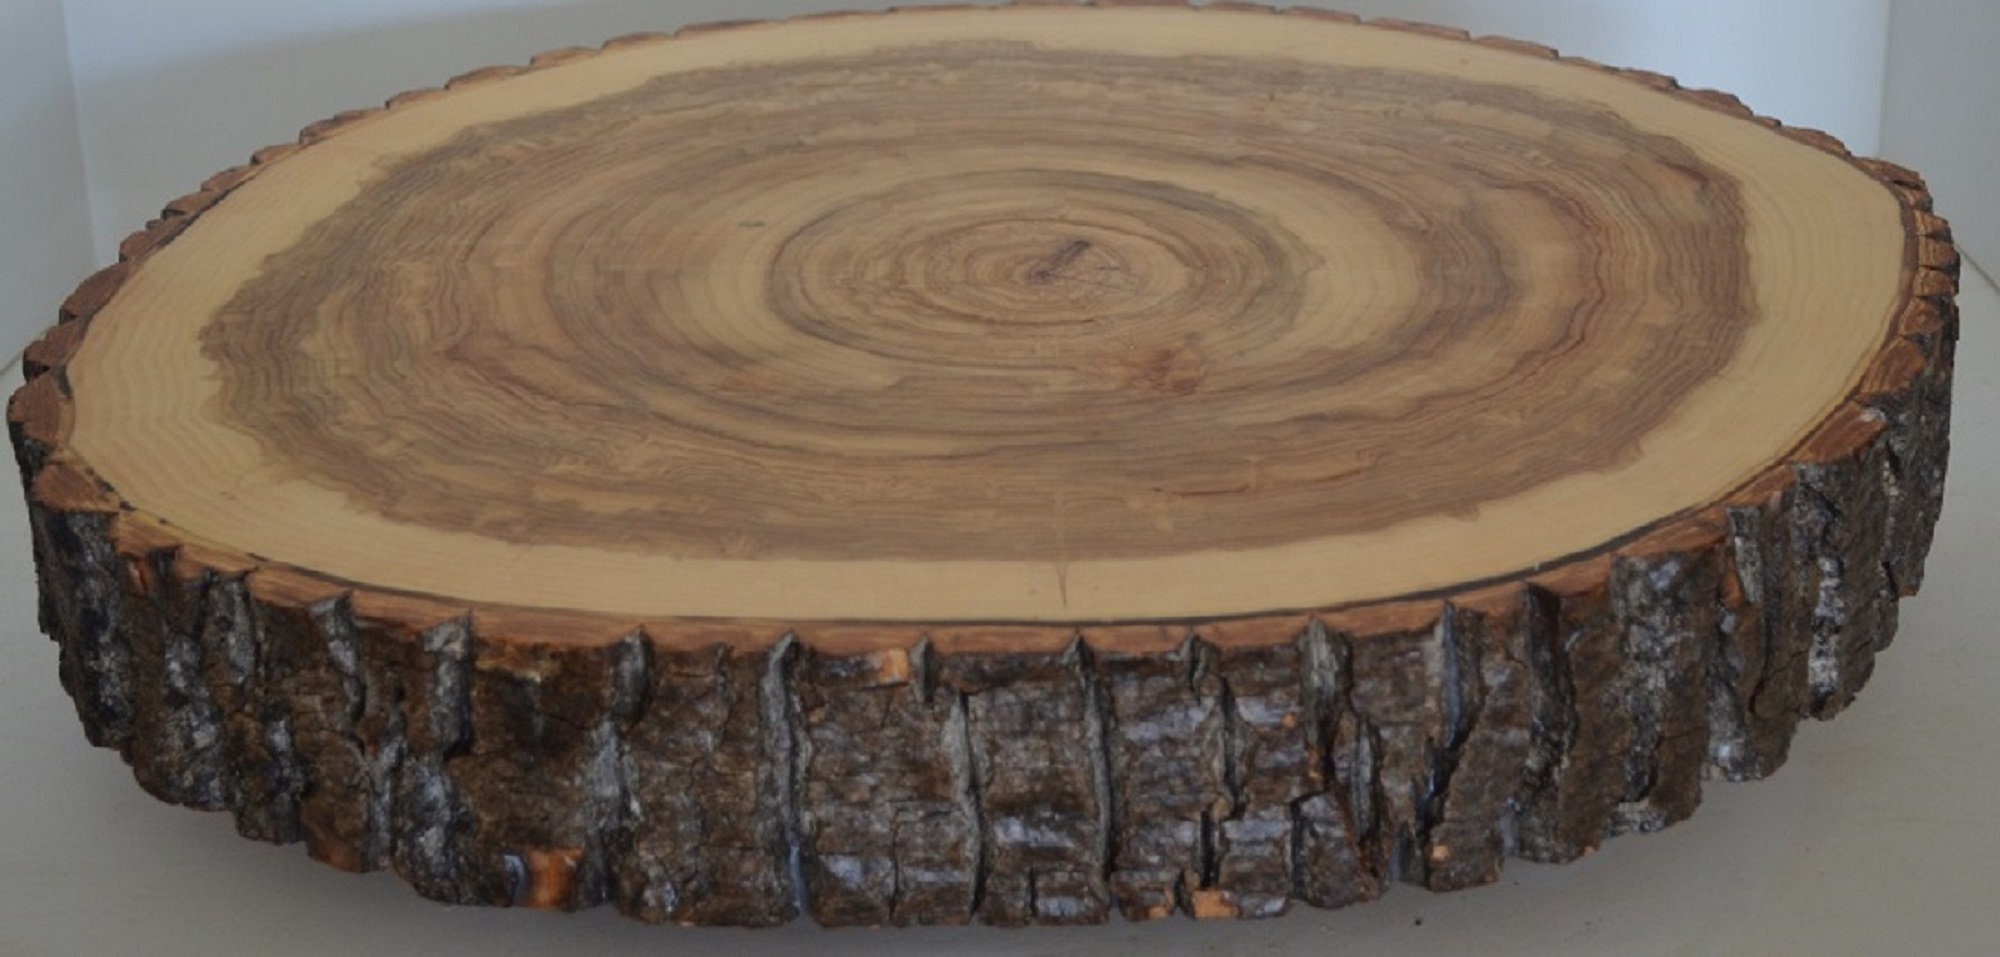 Log Slice Slab for Cake Stand, Cutting Board